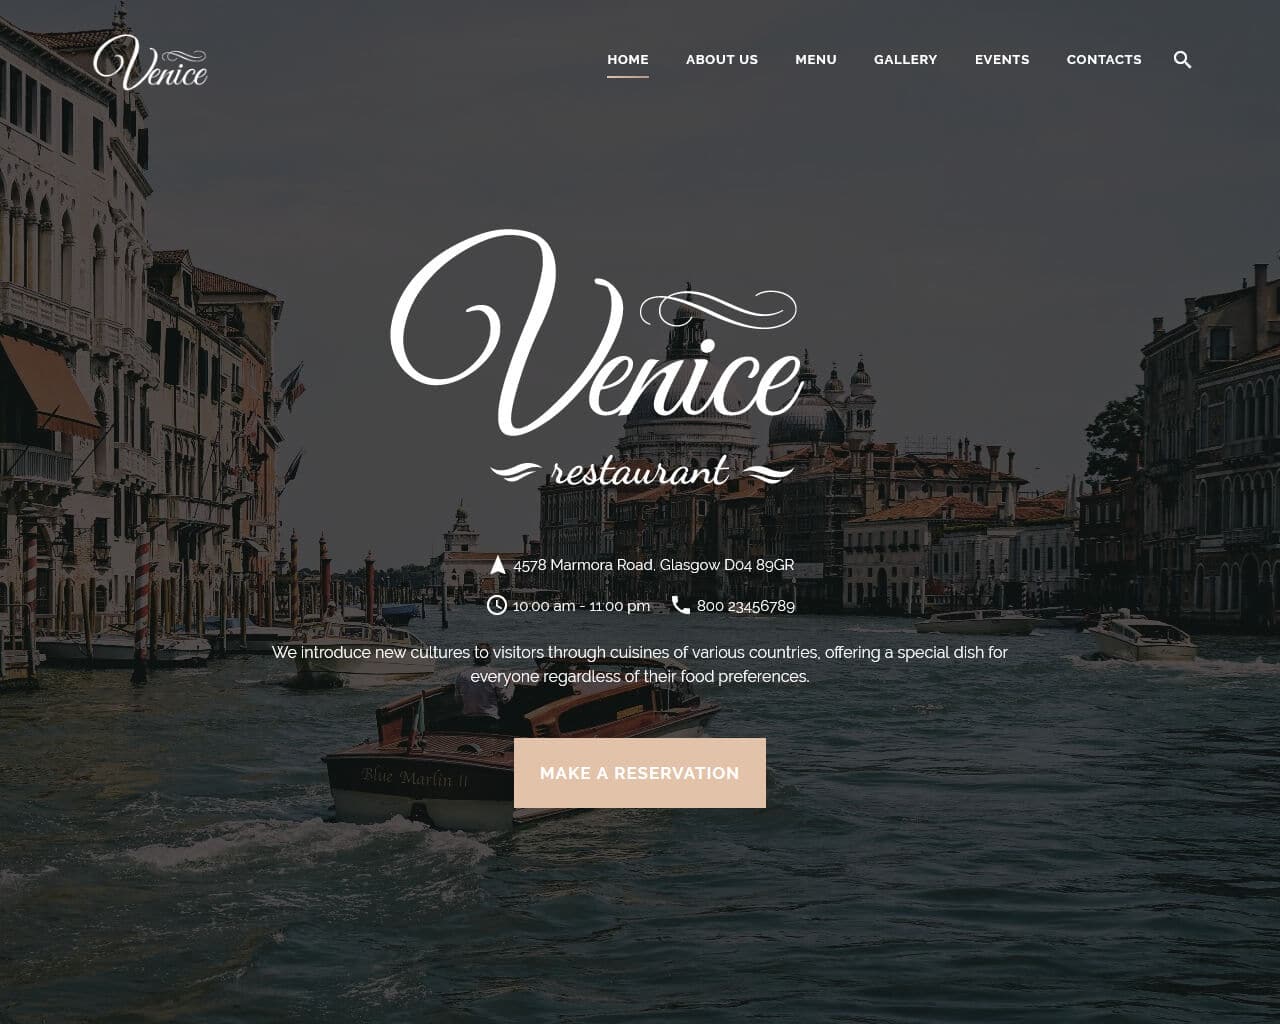 Venice Restaurant Website Template